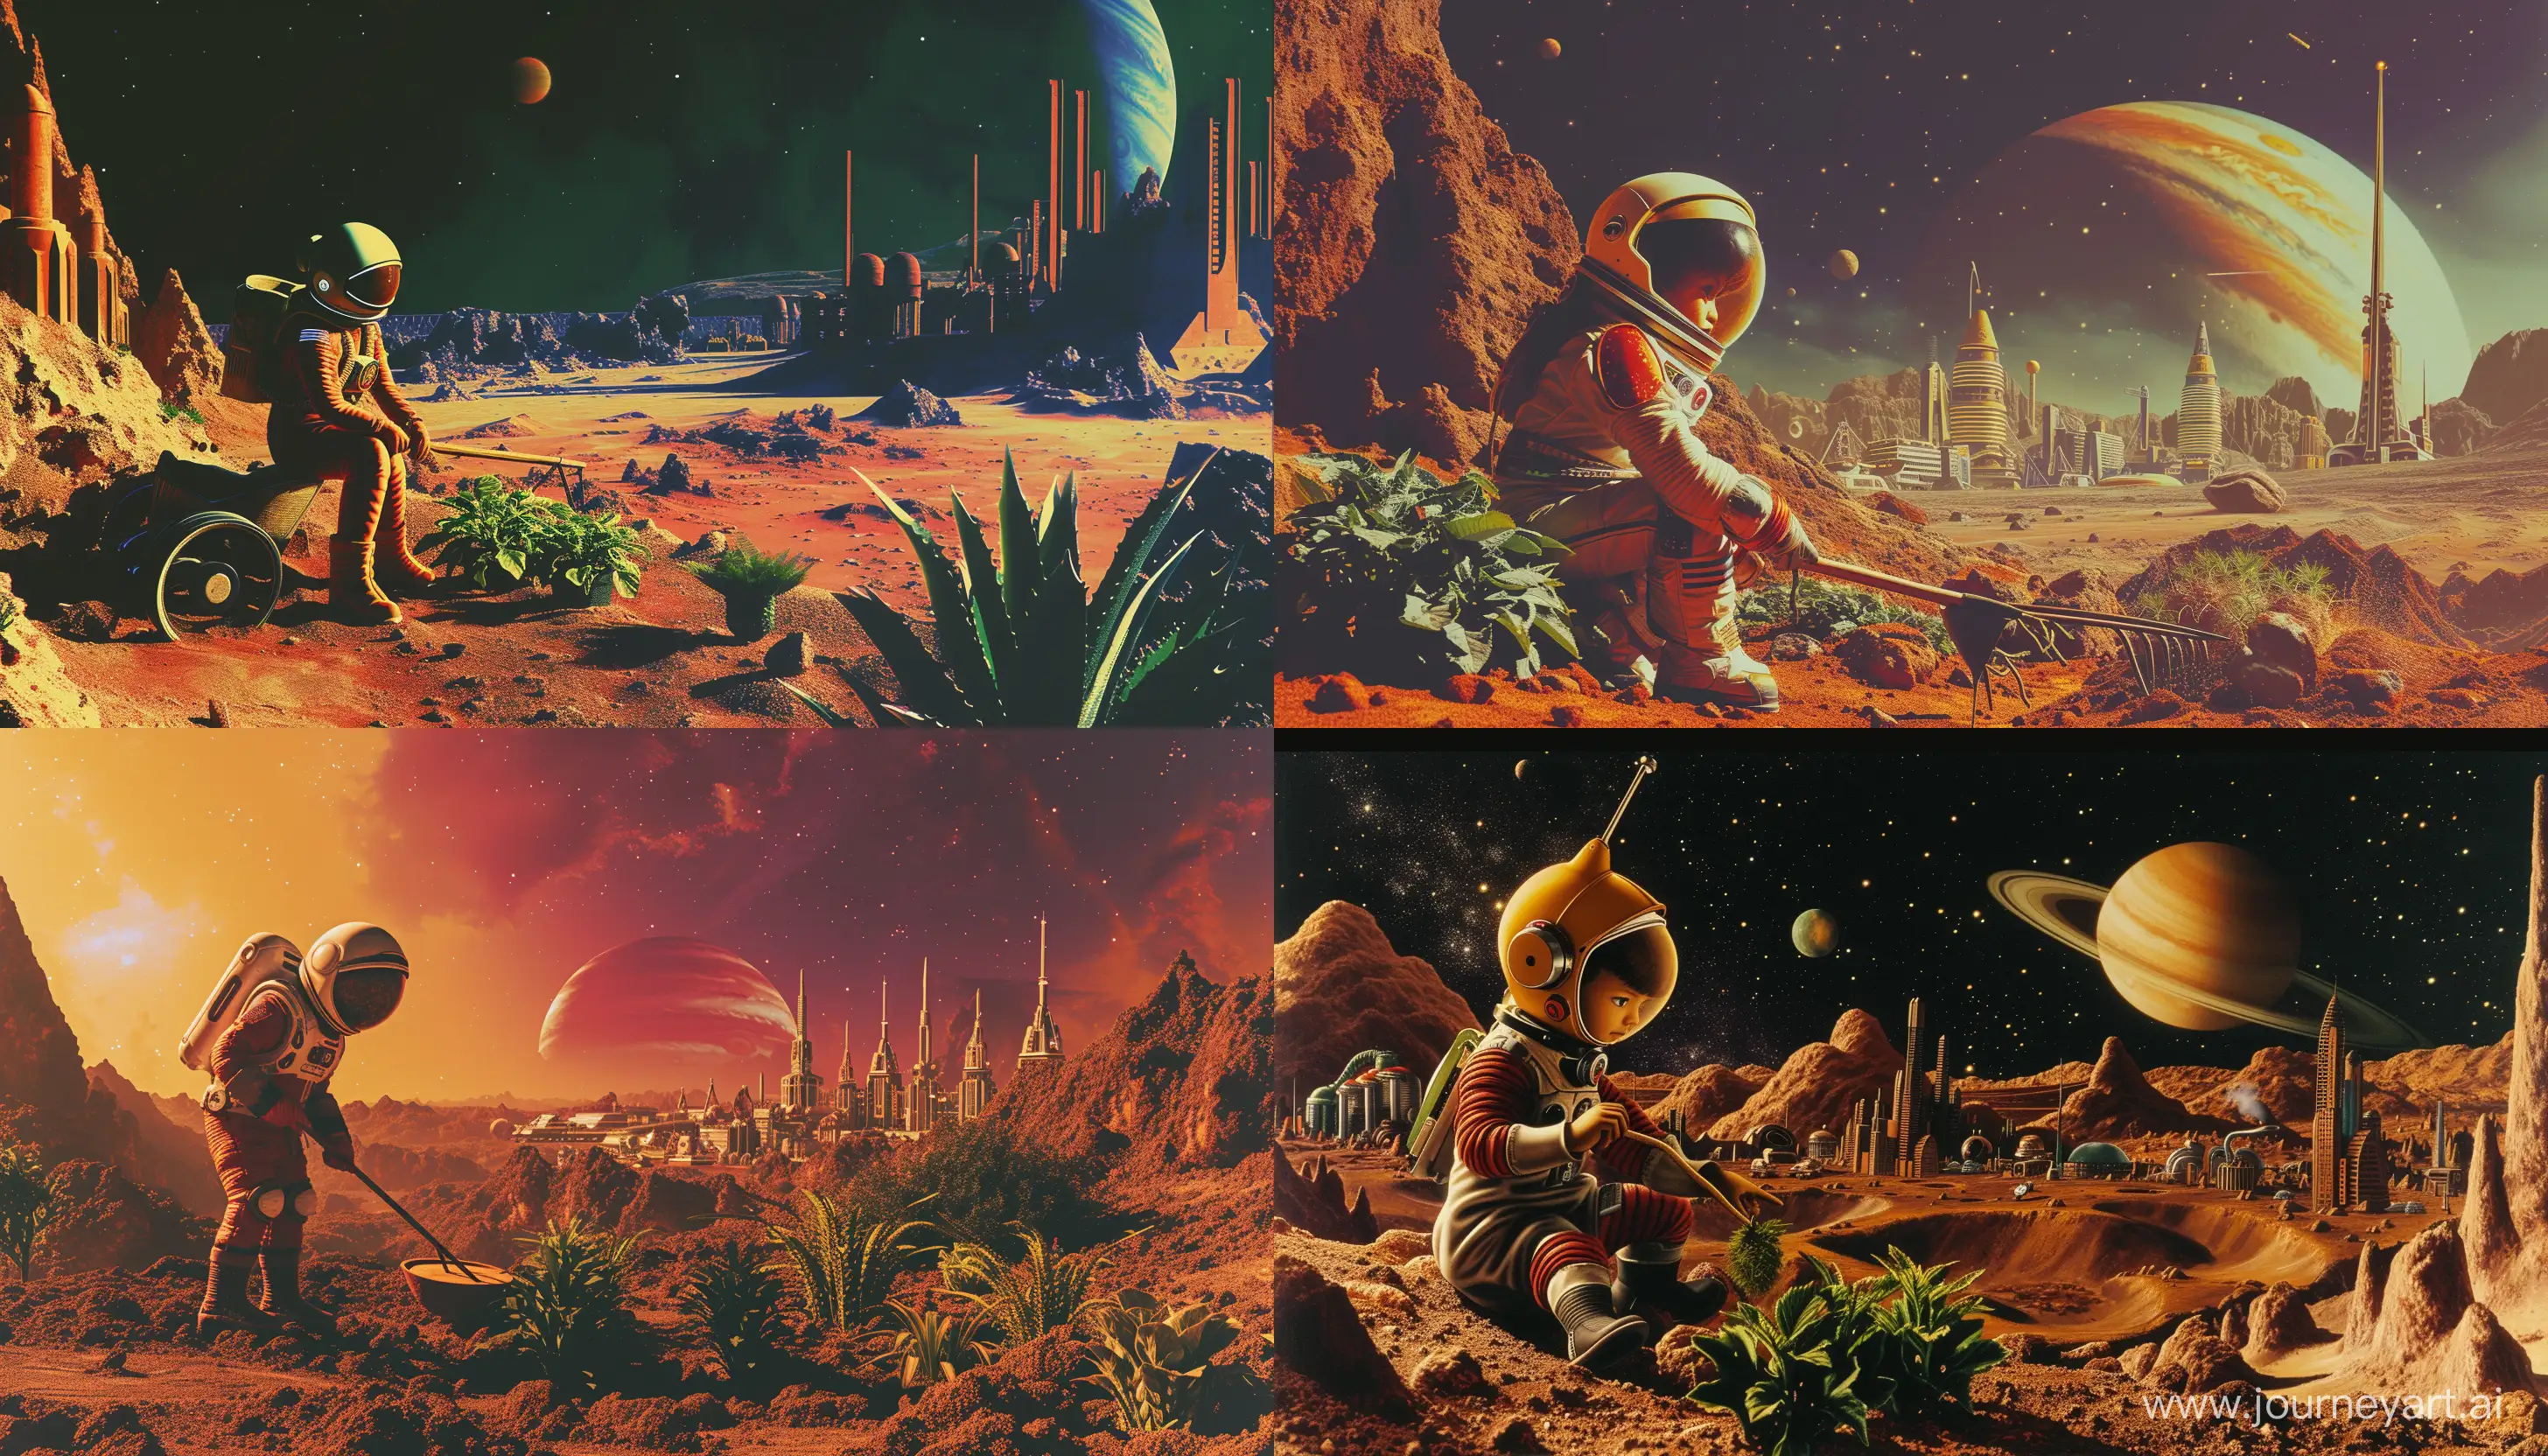 Futuristic-1980s-Mars-City-Space-Helmet-Girl-Farming-Amidst-Cosmic-Splendor